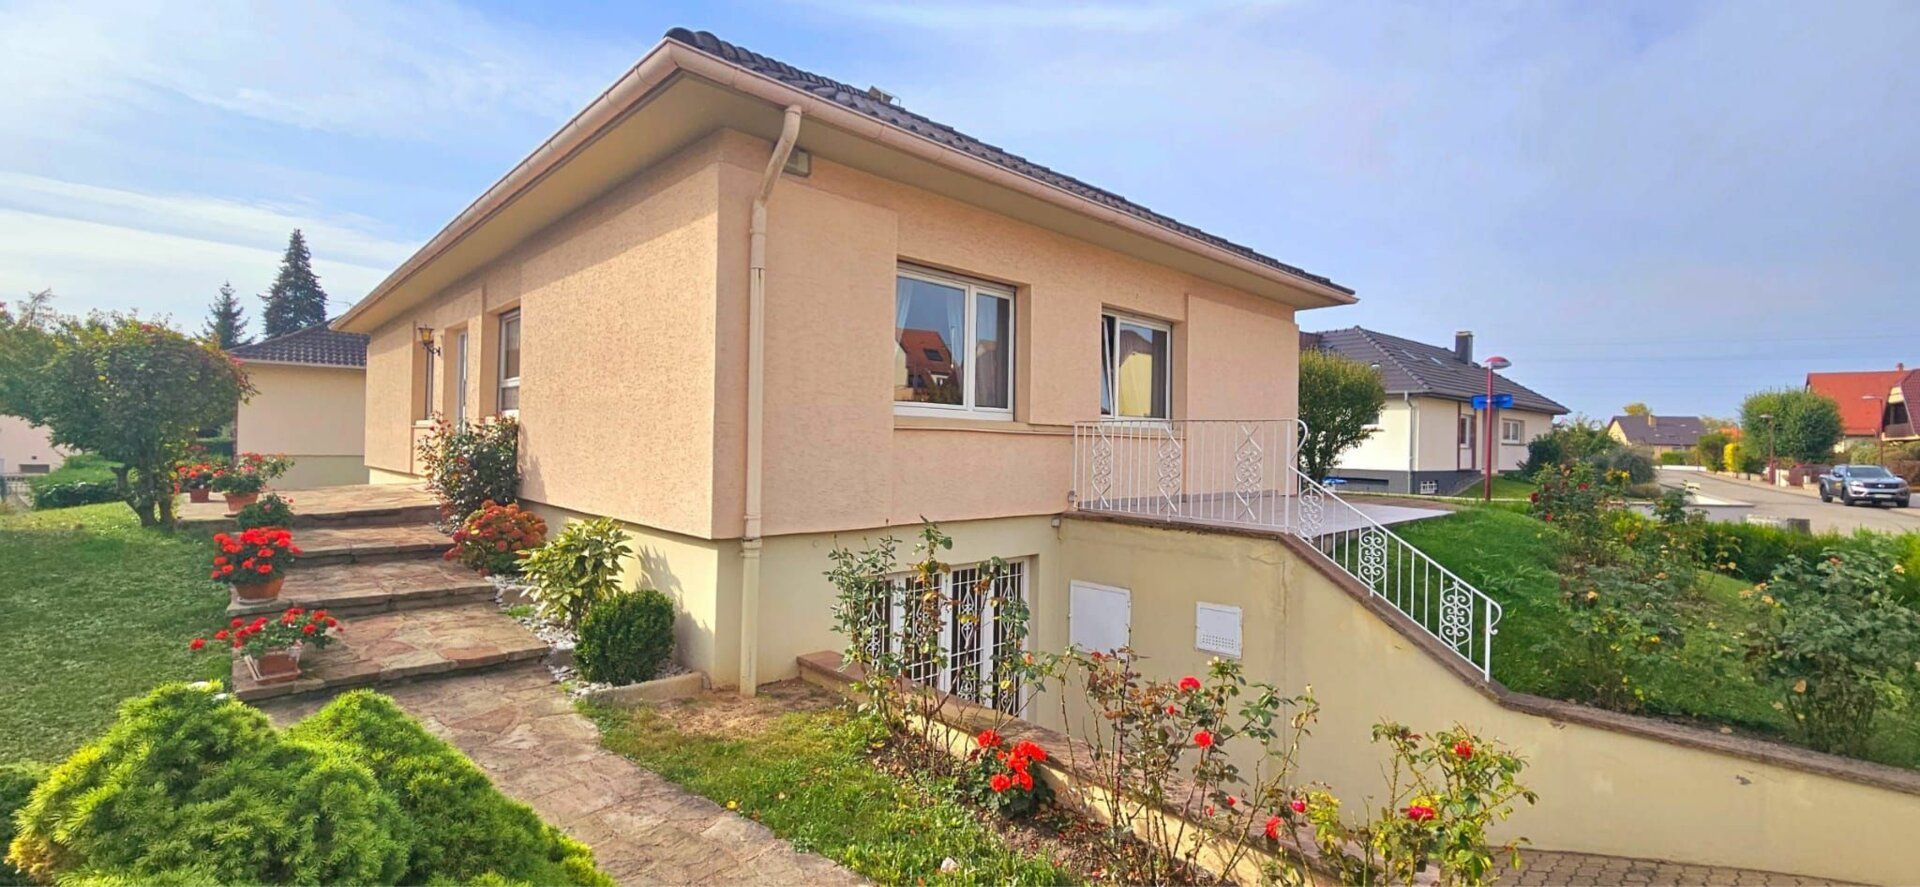 Maison à vendre 4 132m2 à Souffelweyersheim vignette-1